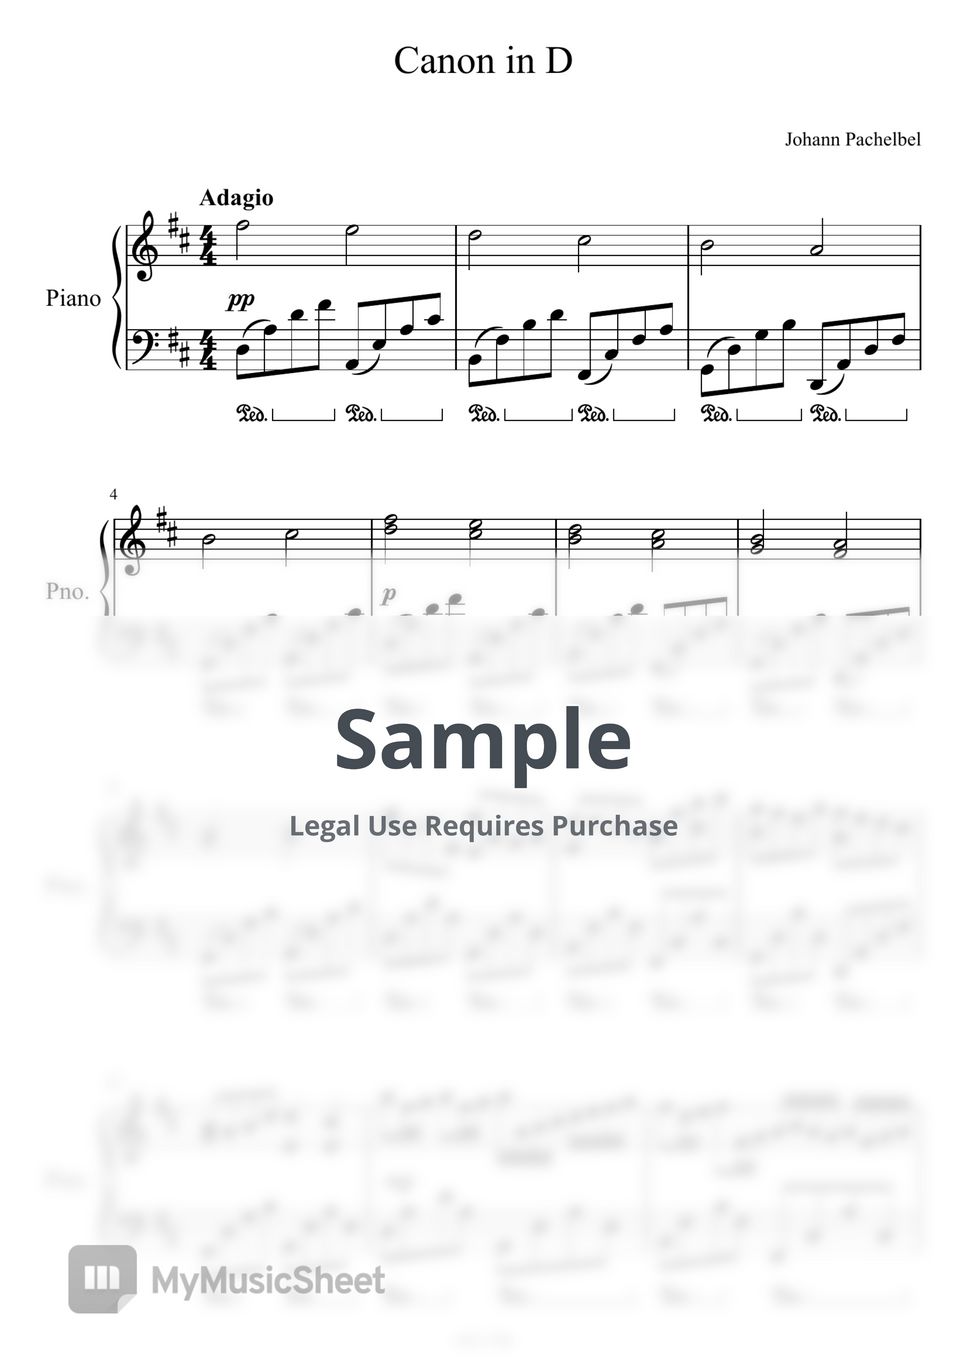 Johann Pachelbel (Piano Version) - Canon in D (Piano) Sheets by Sheet ...